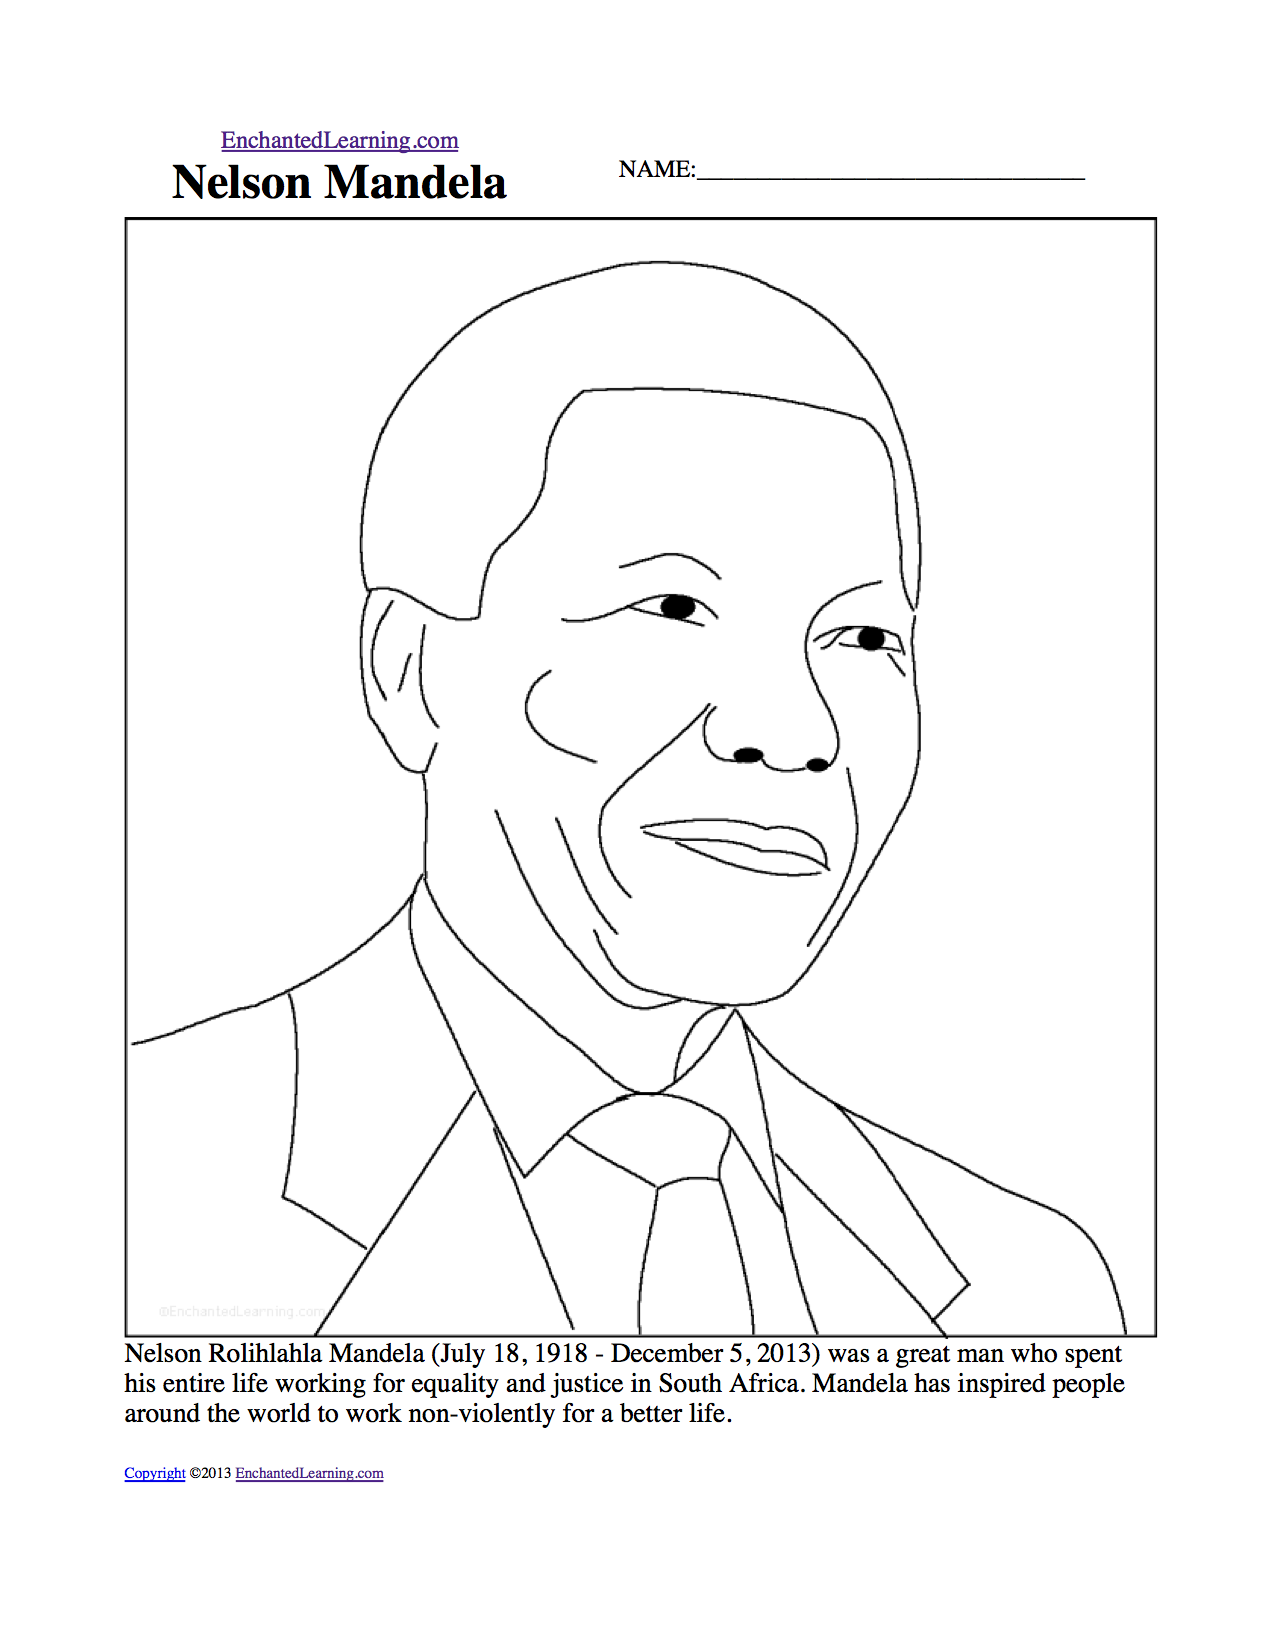 Nelson Mandela printout